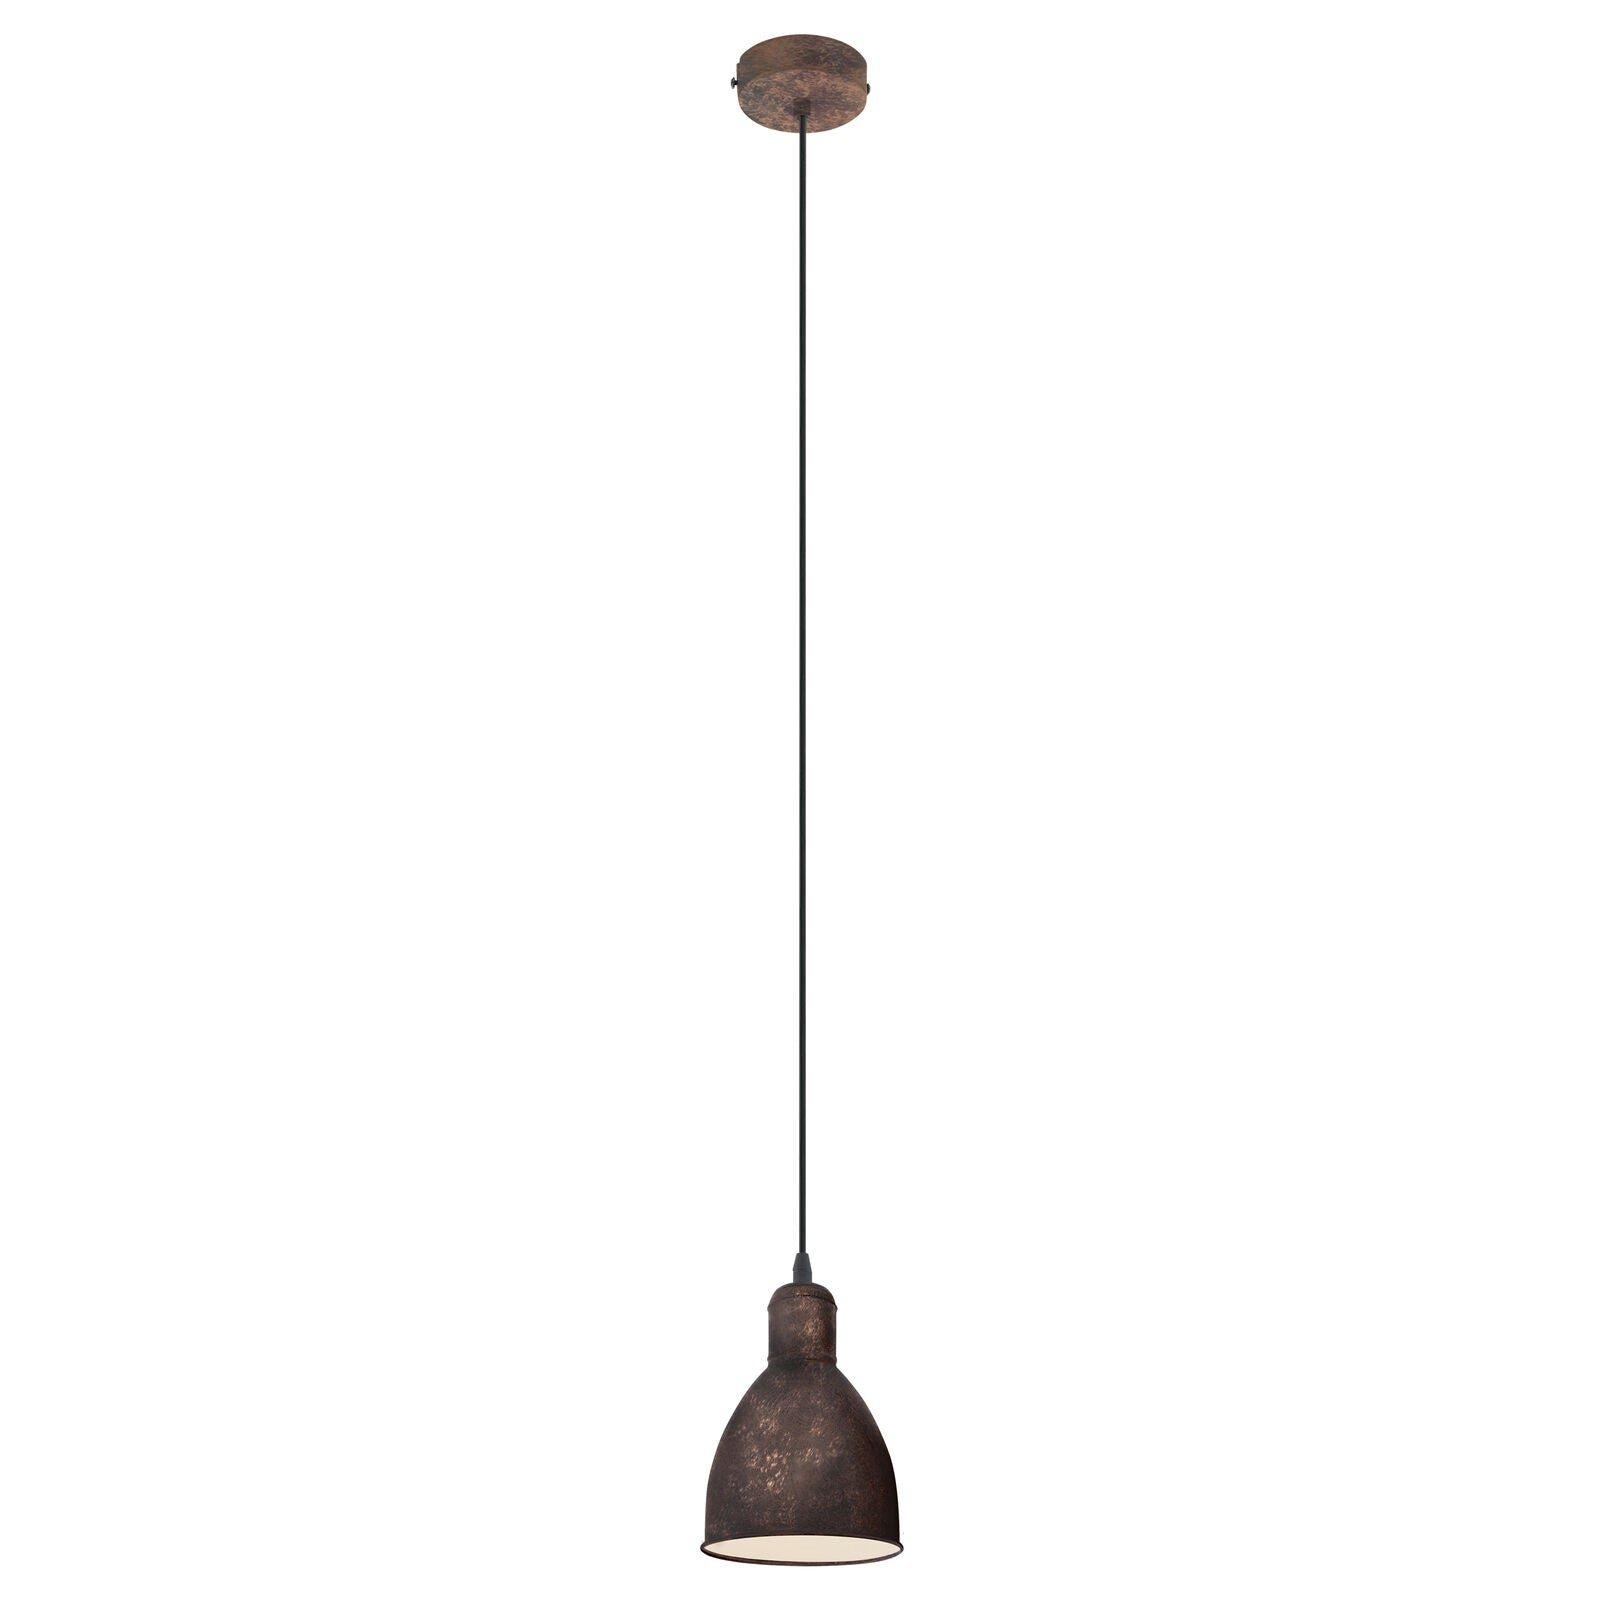 Hanging Ceiling Pendant Light Antique Copper Shade 1 x 40W E27 Bulb Feature